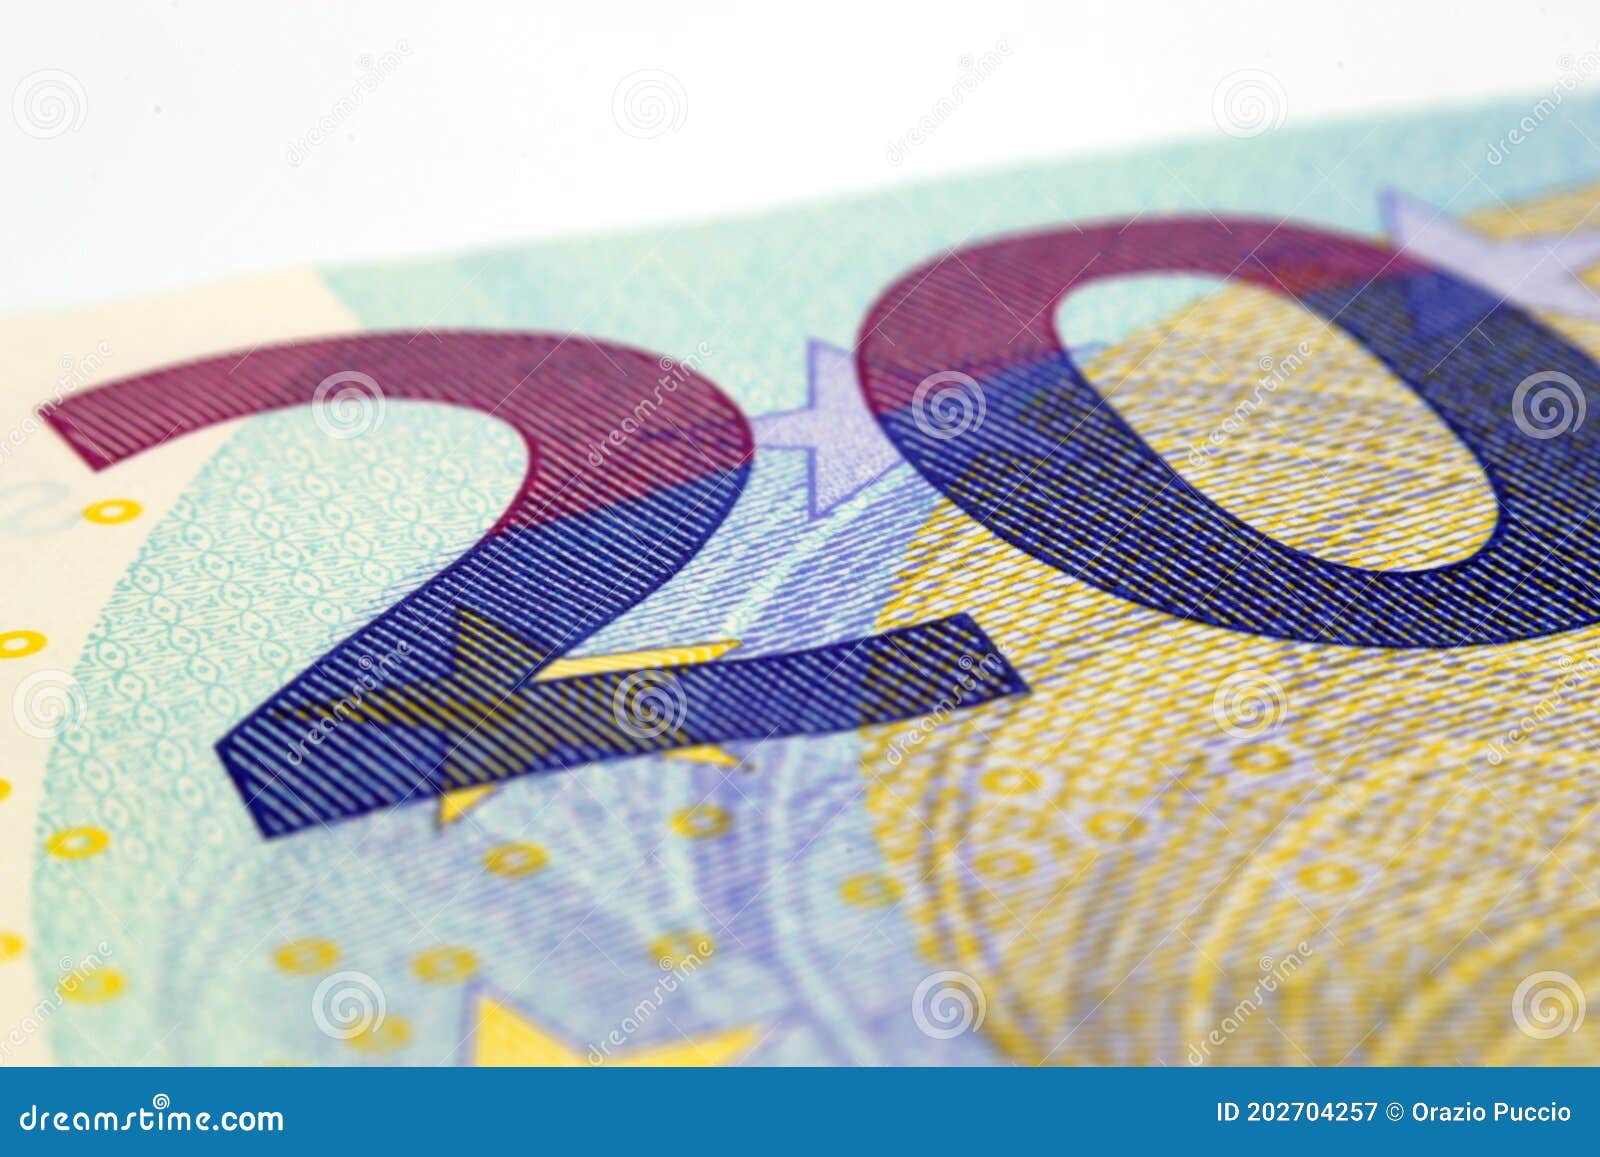 close up of a twenty euro banknote